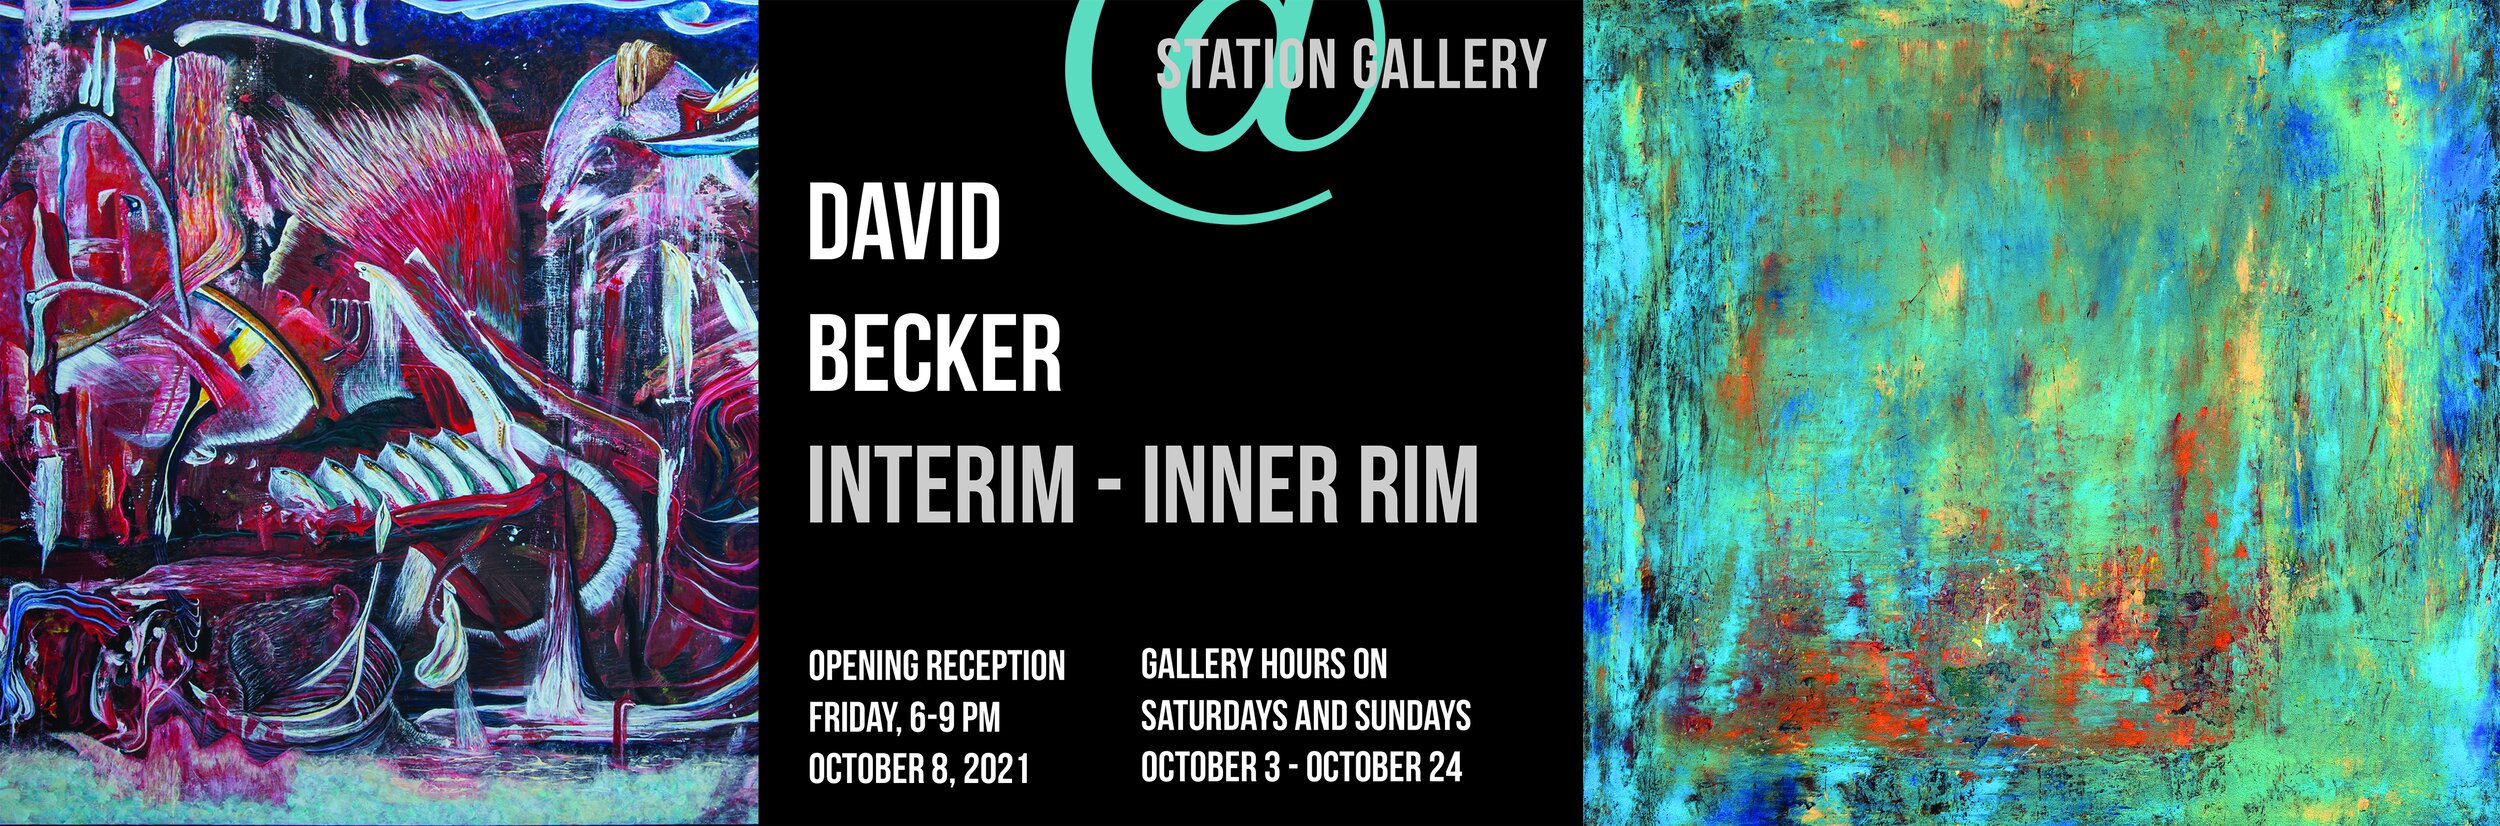 david becker solo exhibit interim inner rim.jpg